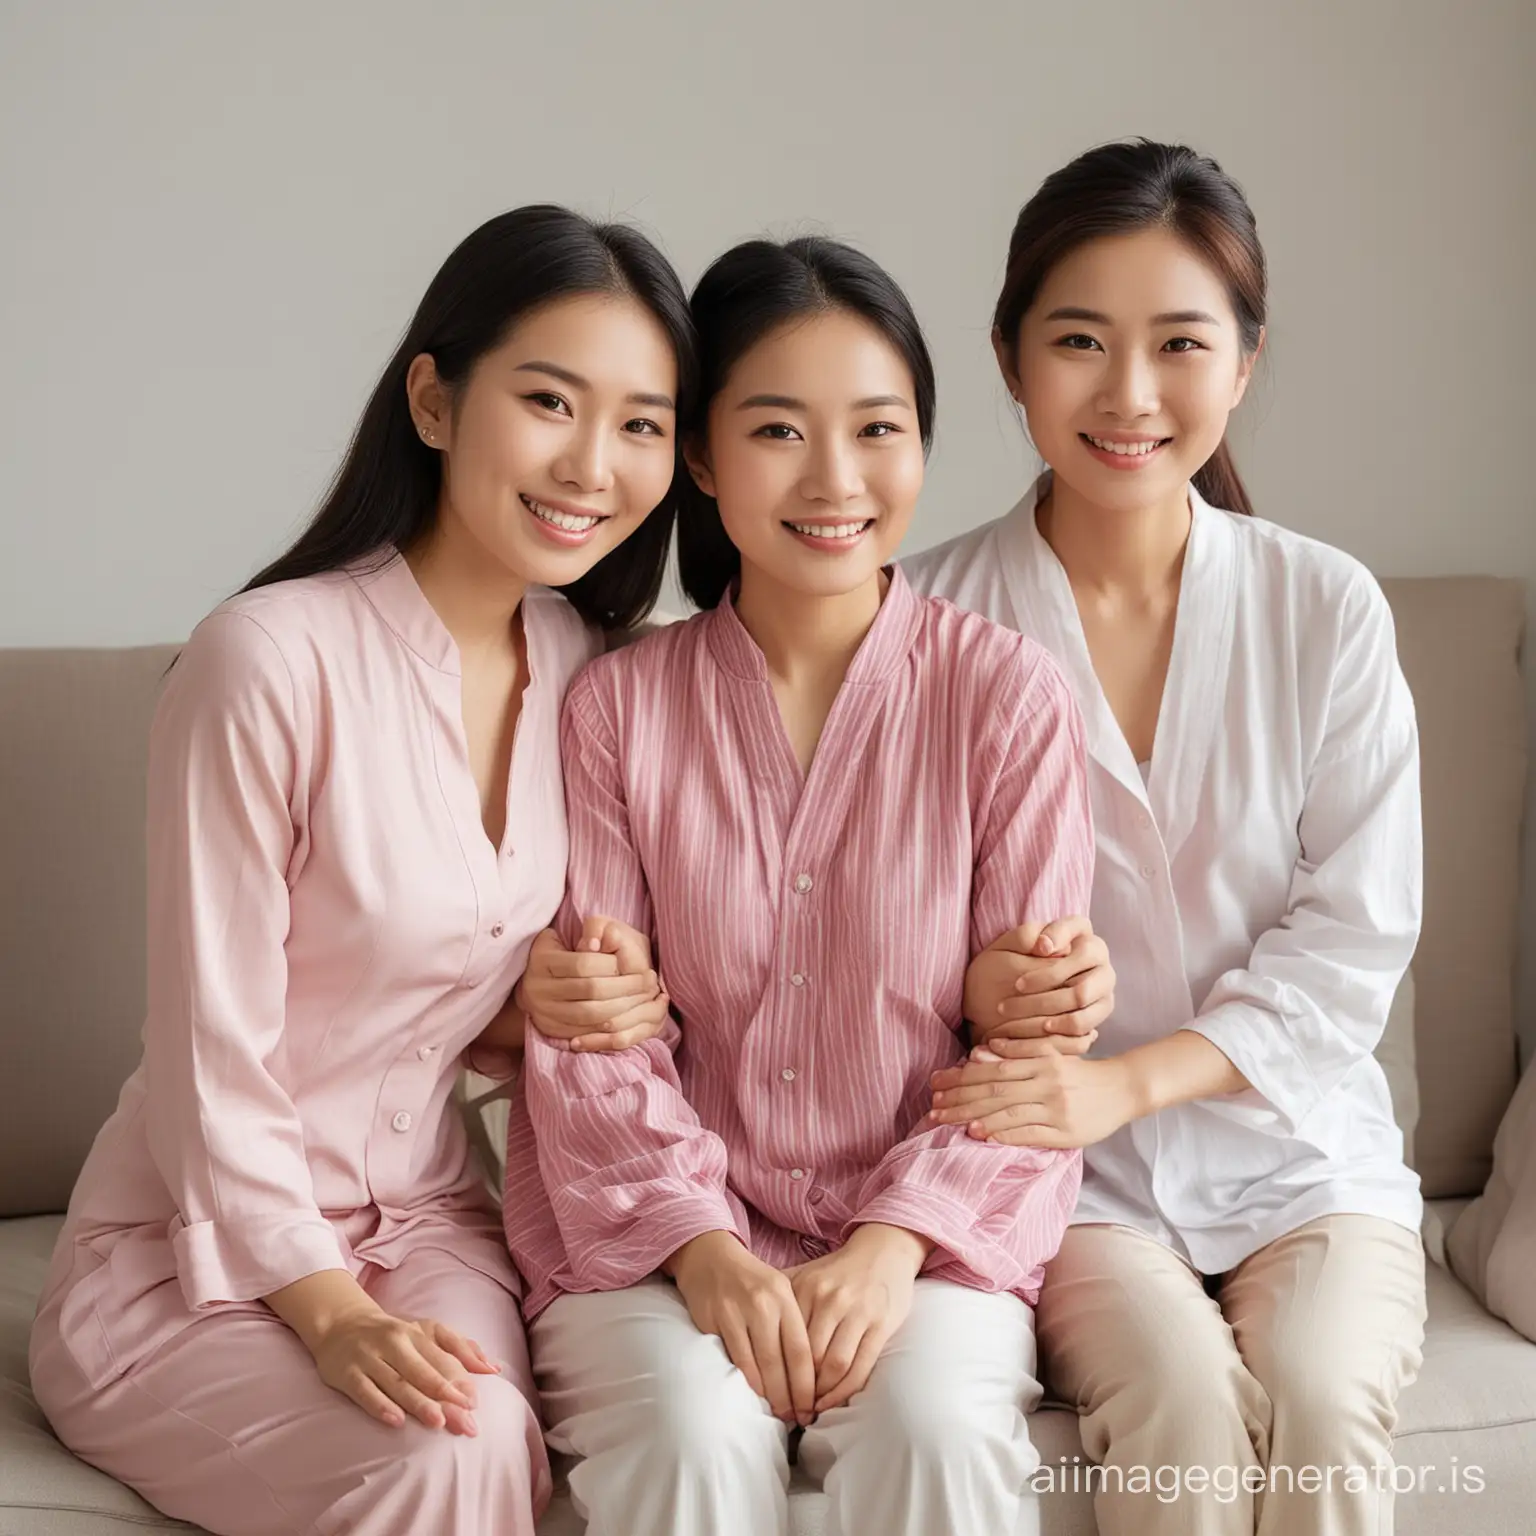 thee Asian Women, Beautiful, Faithful, care for Family